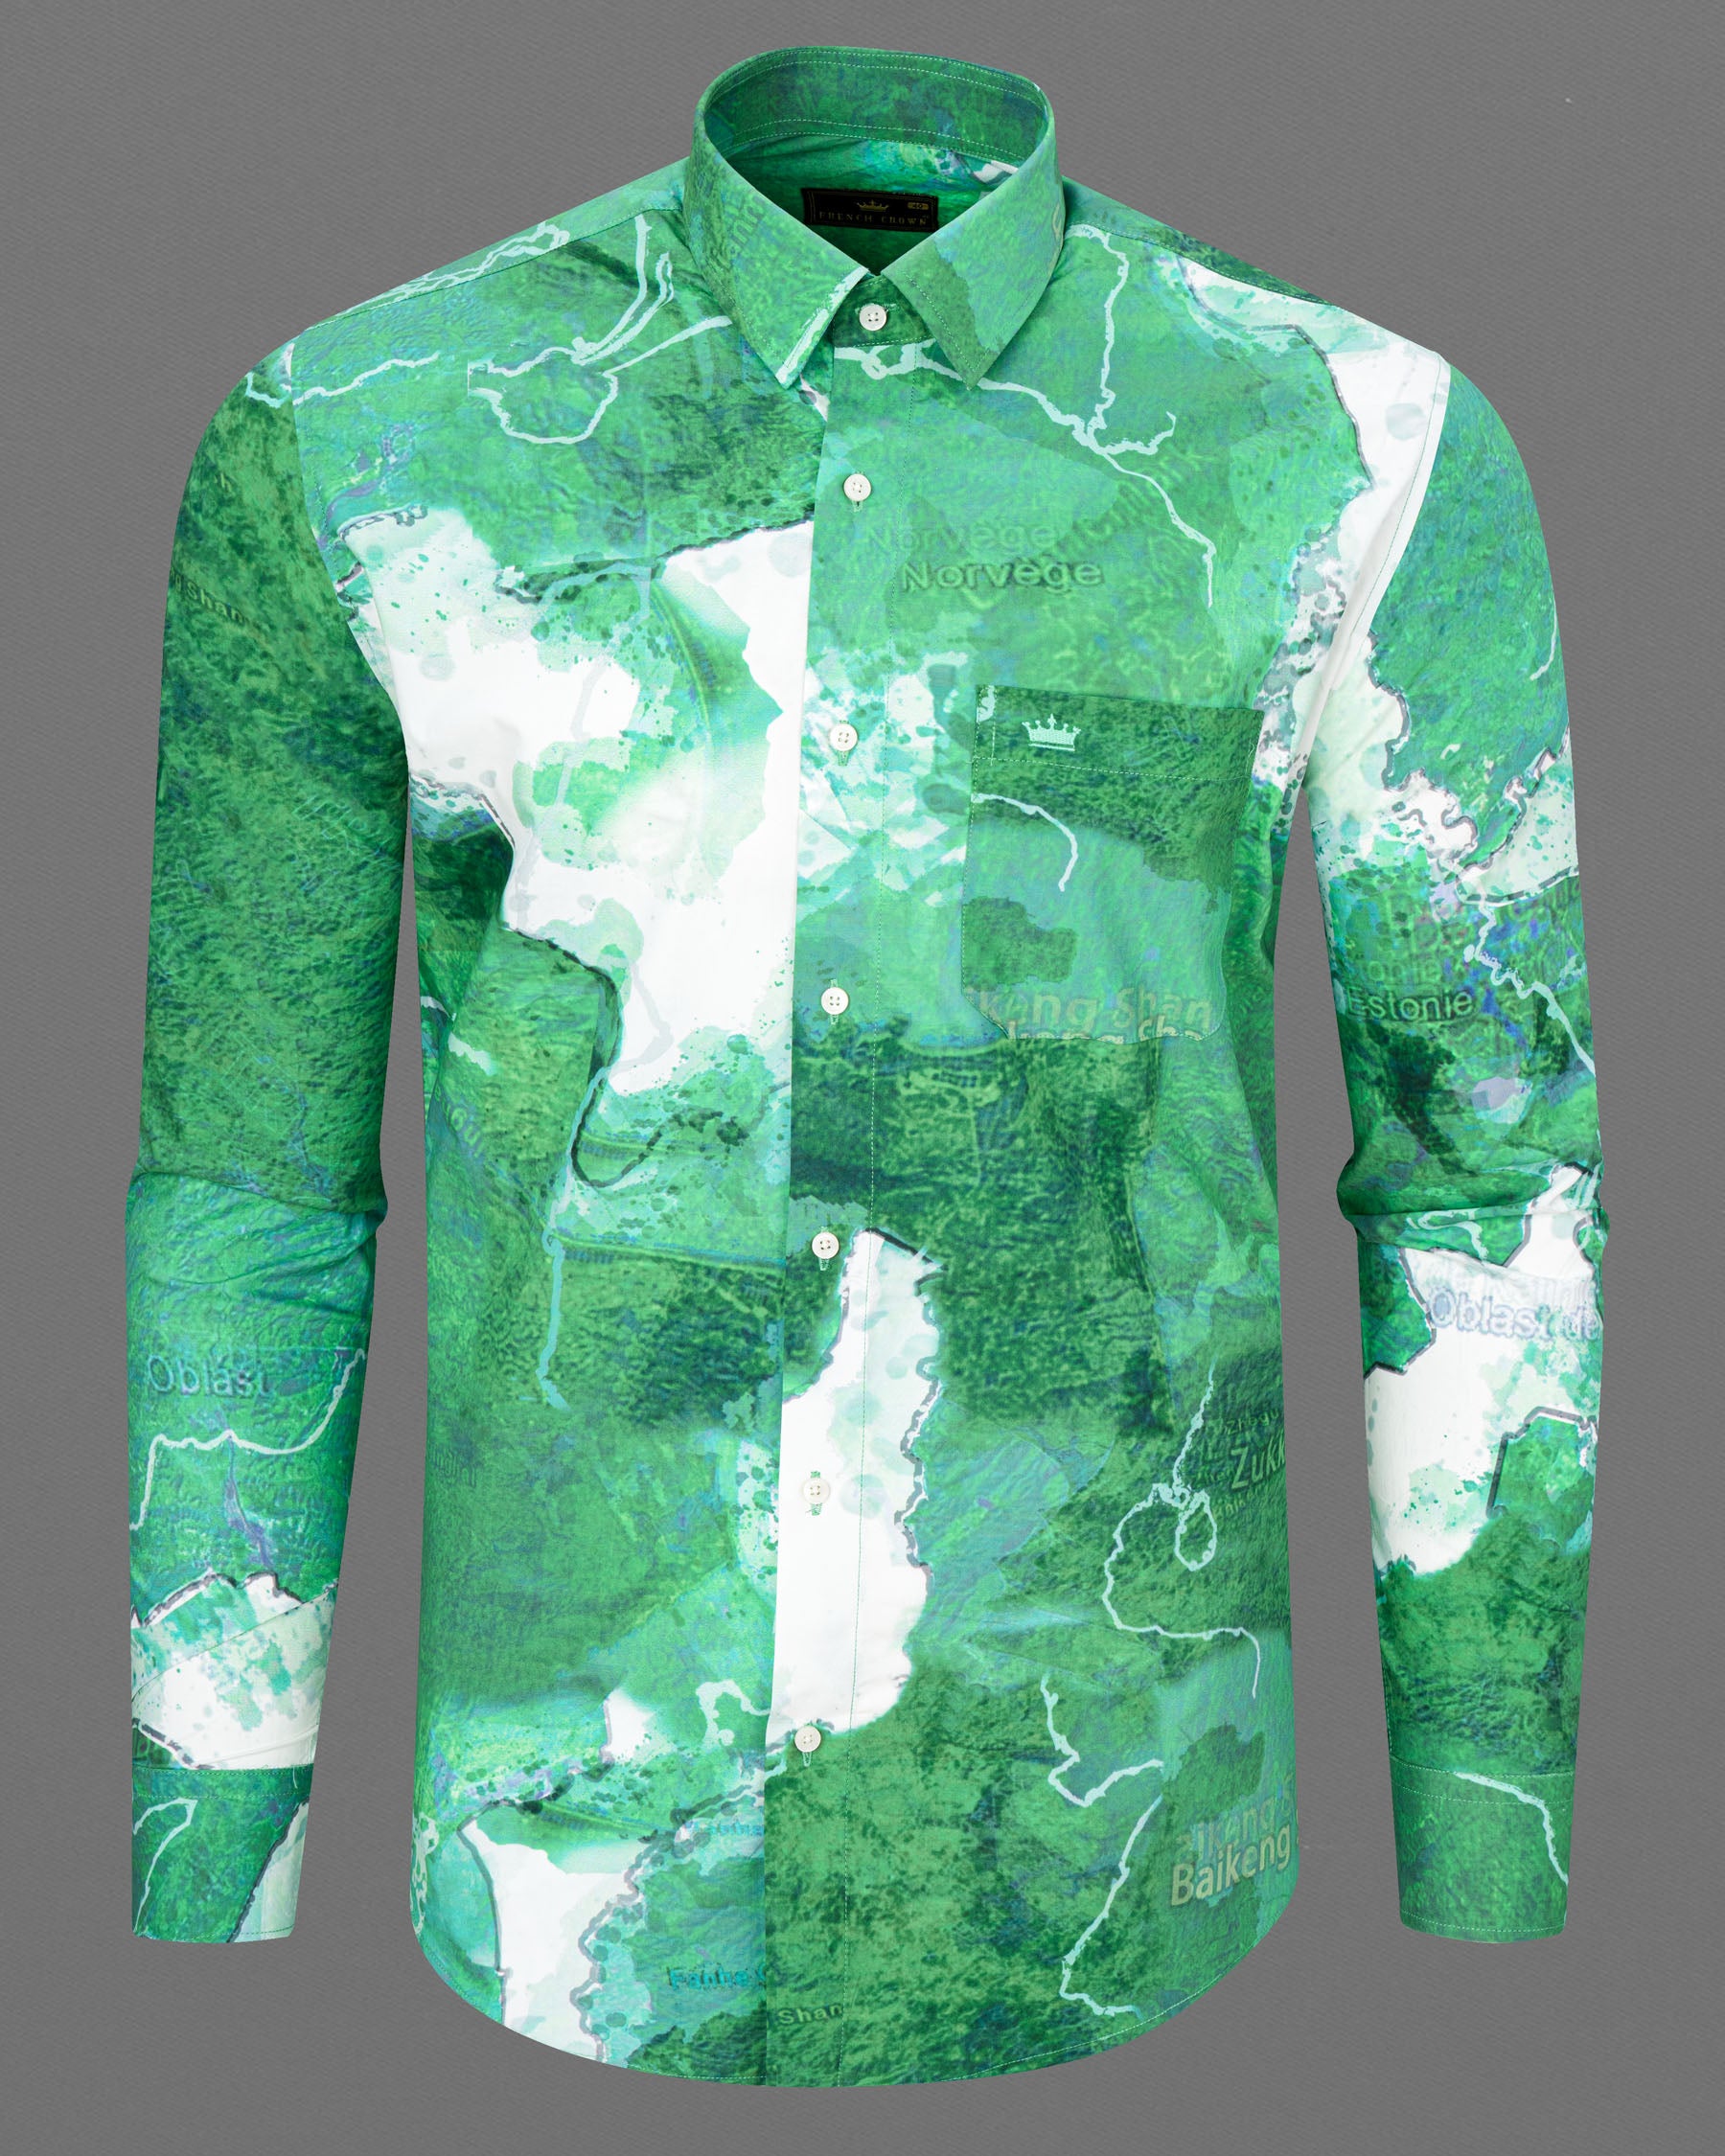 Mantis Green Marble Printed Premium Cotton Shirt 7413-38,7413-38,7413-39,7413-39,7413-40,7413-40,7413-42,7413-42,7413-44,7413-44,7413-46,7413-46,7413-48,7413-48,7413-50,7413-50,7413-52,7413-52